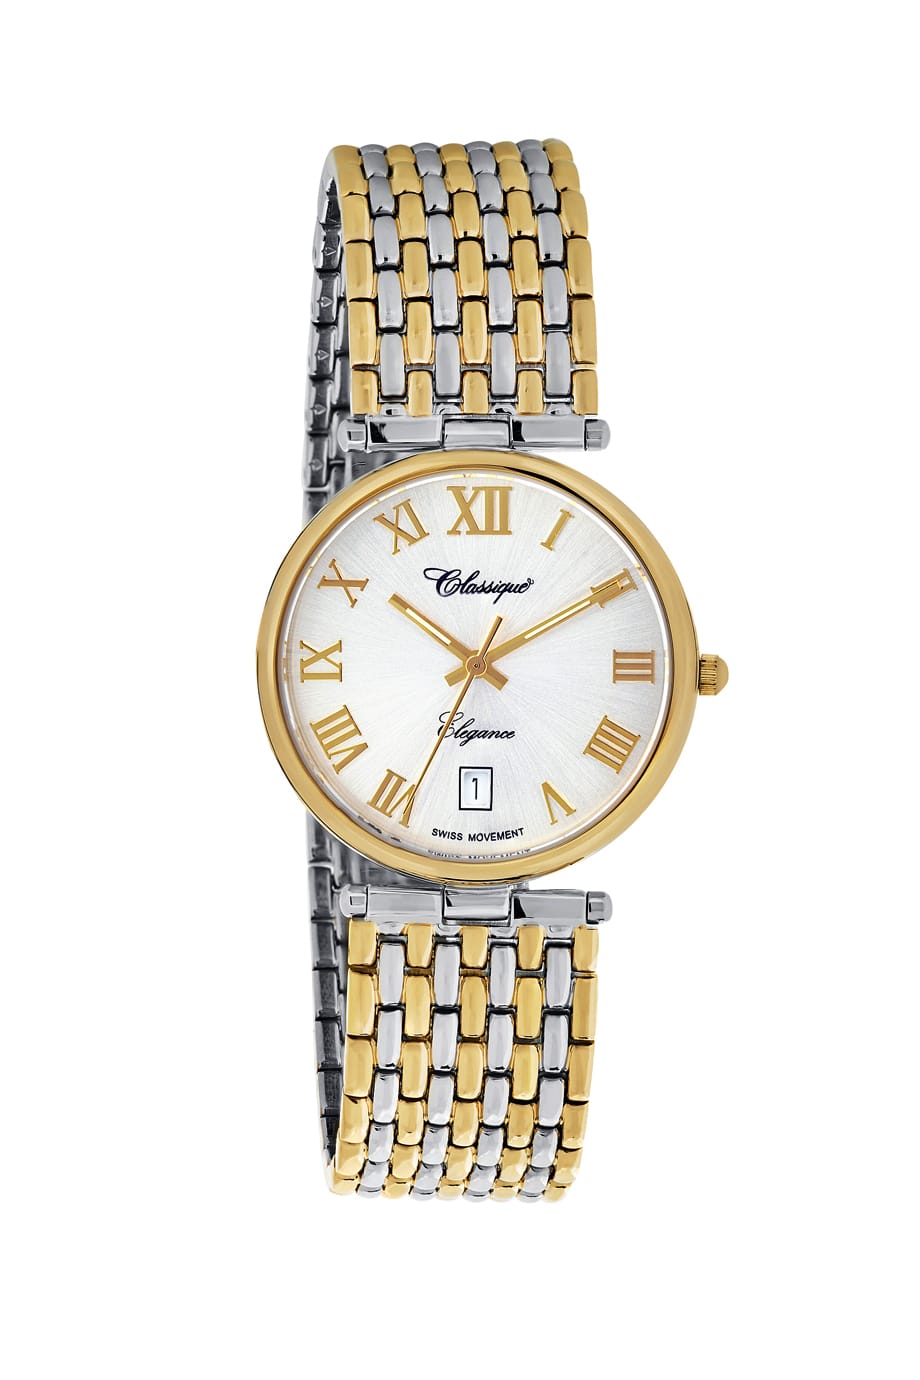 Classique Roman Numeral Swiss Quartz Watch available at LeGassick Diamonds and Jewellery Gold Coast, Australia.